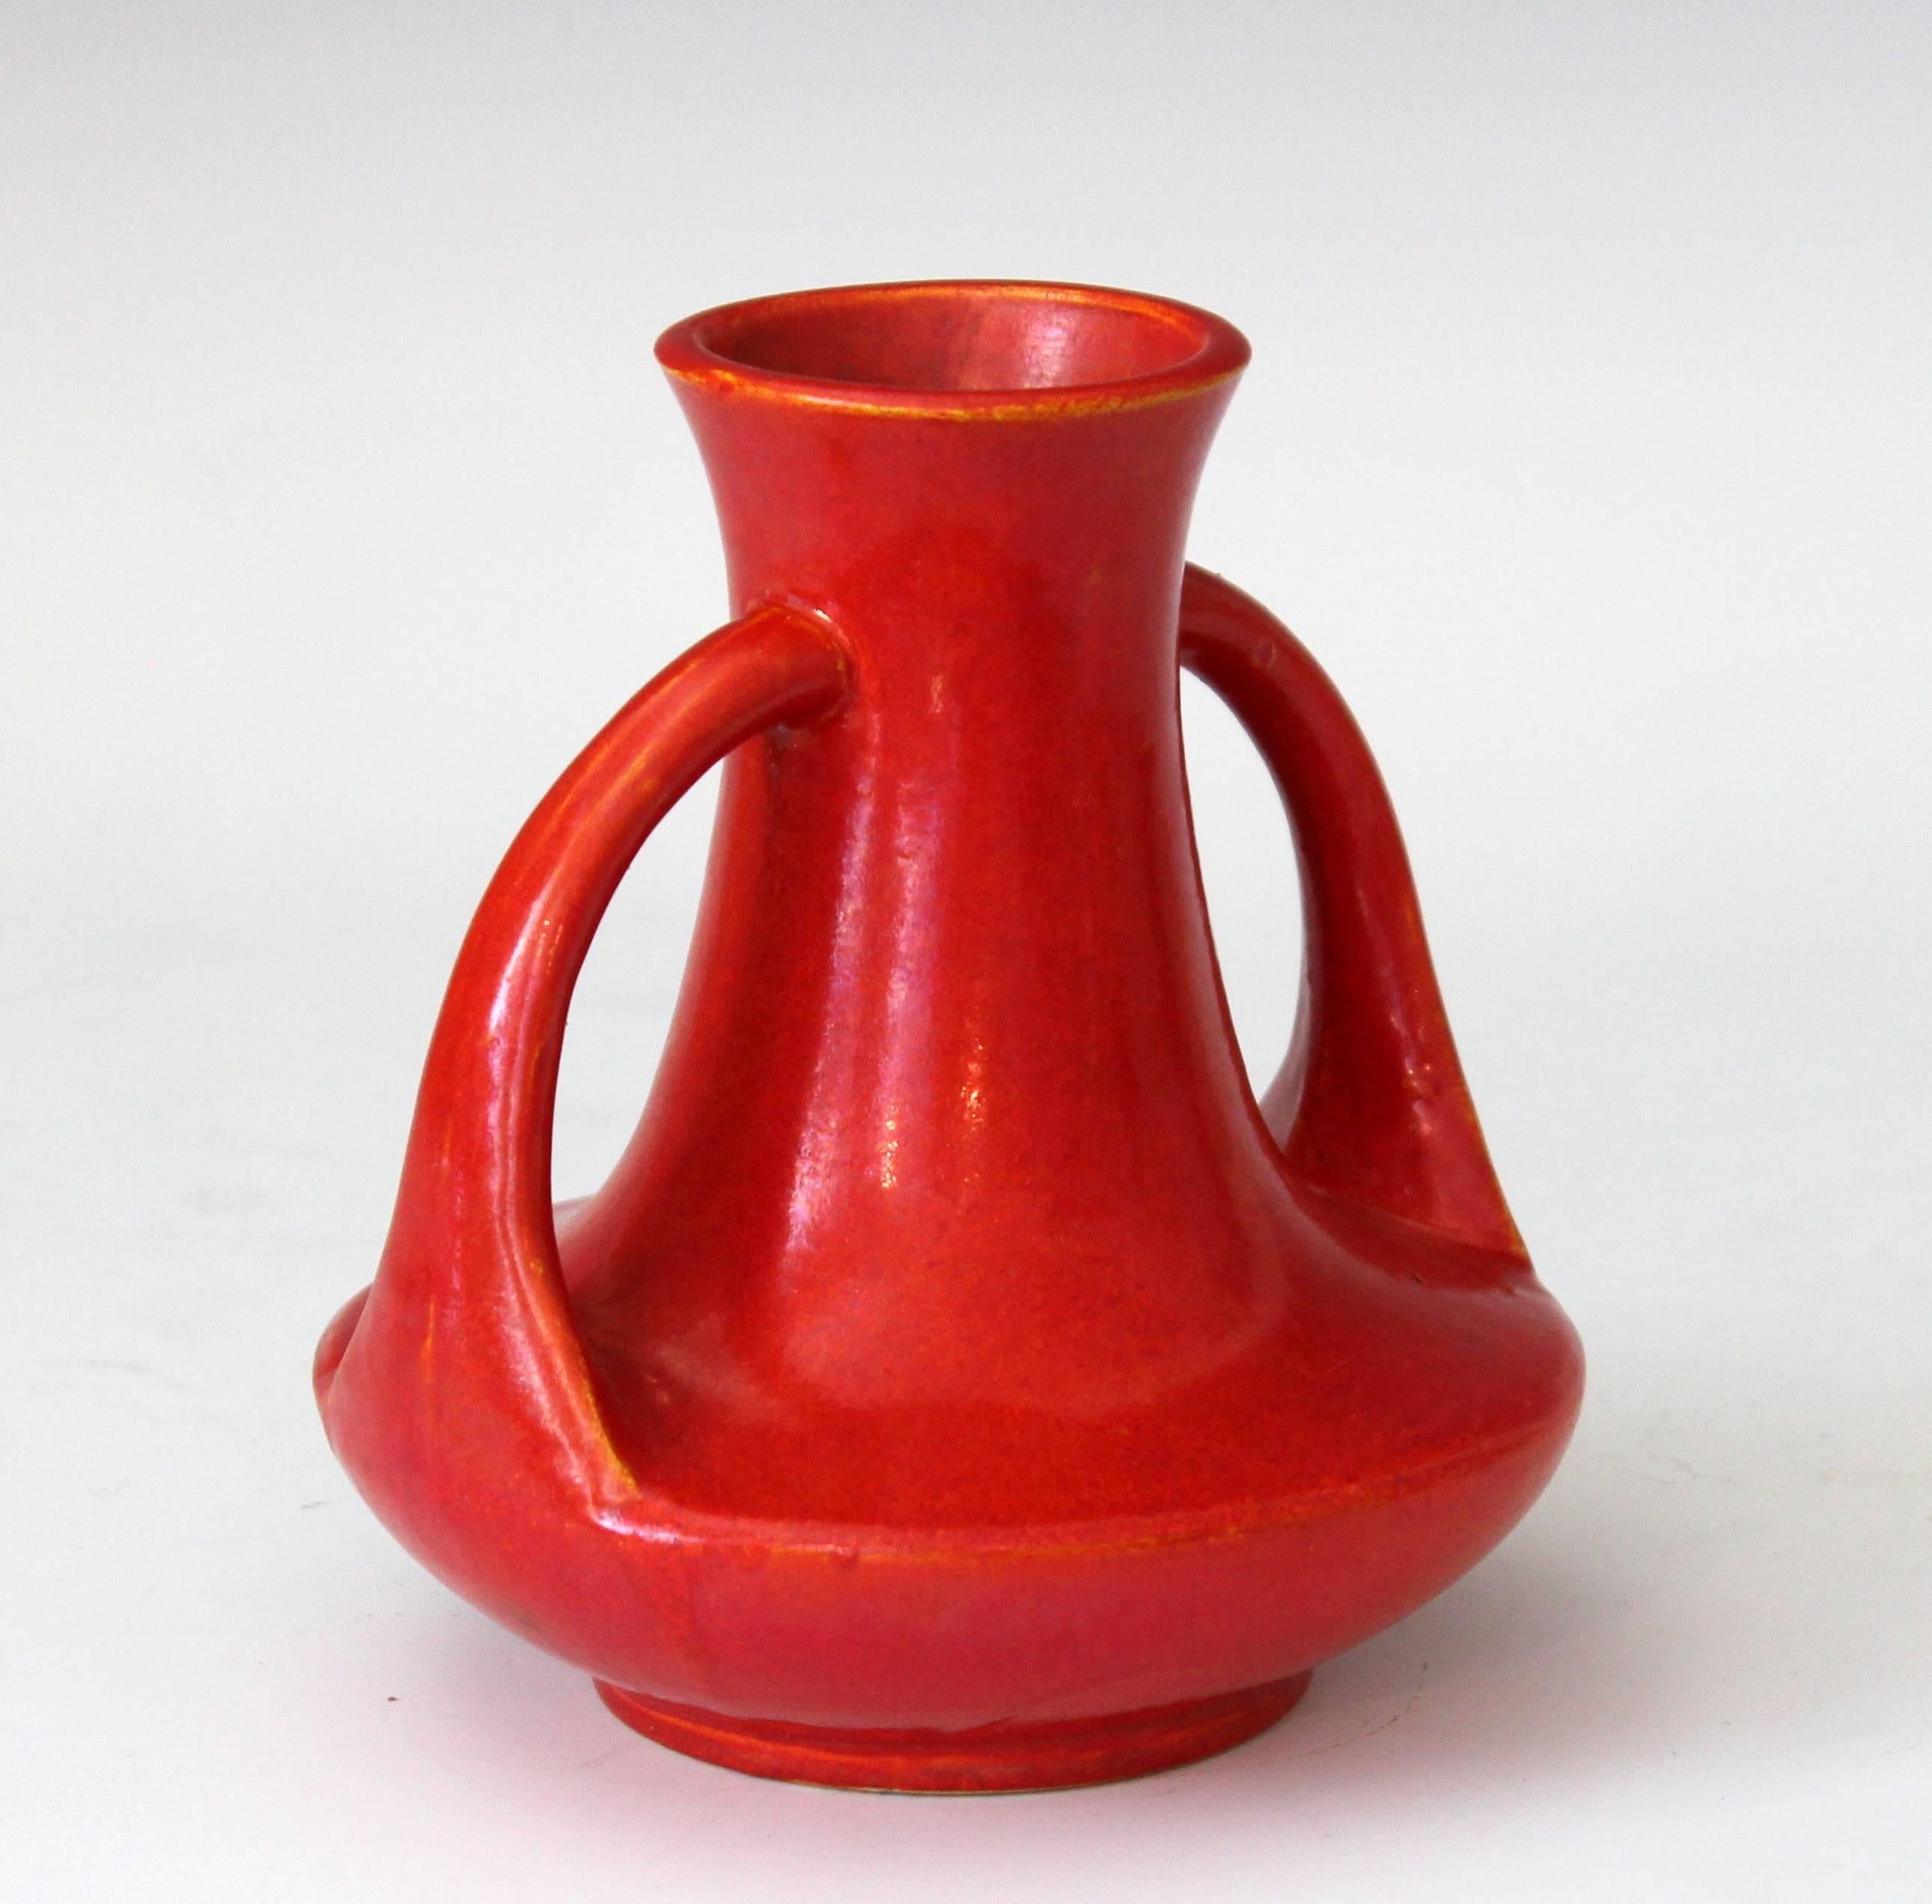 Japanese Awaji Pottery Art Deco Vase in Crystalline Chrome Red Glaze